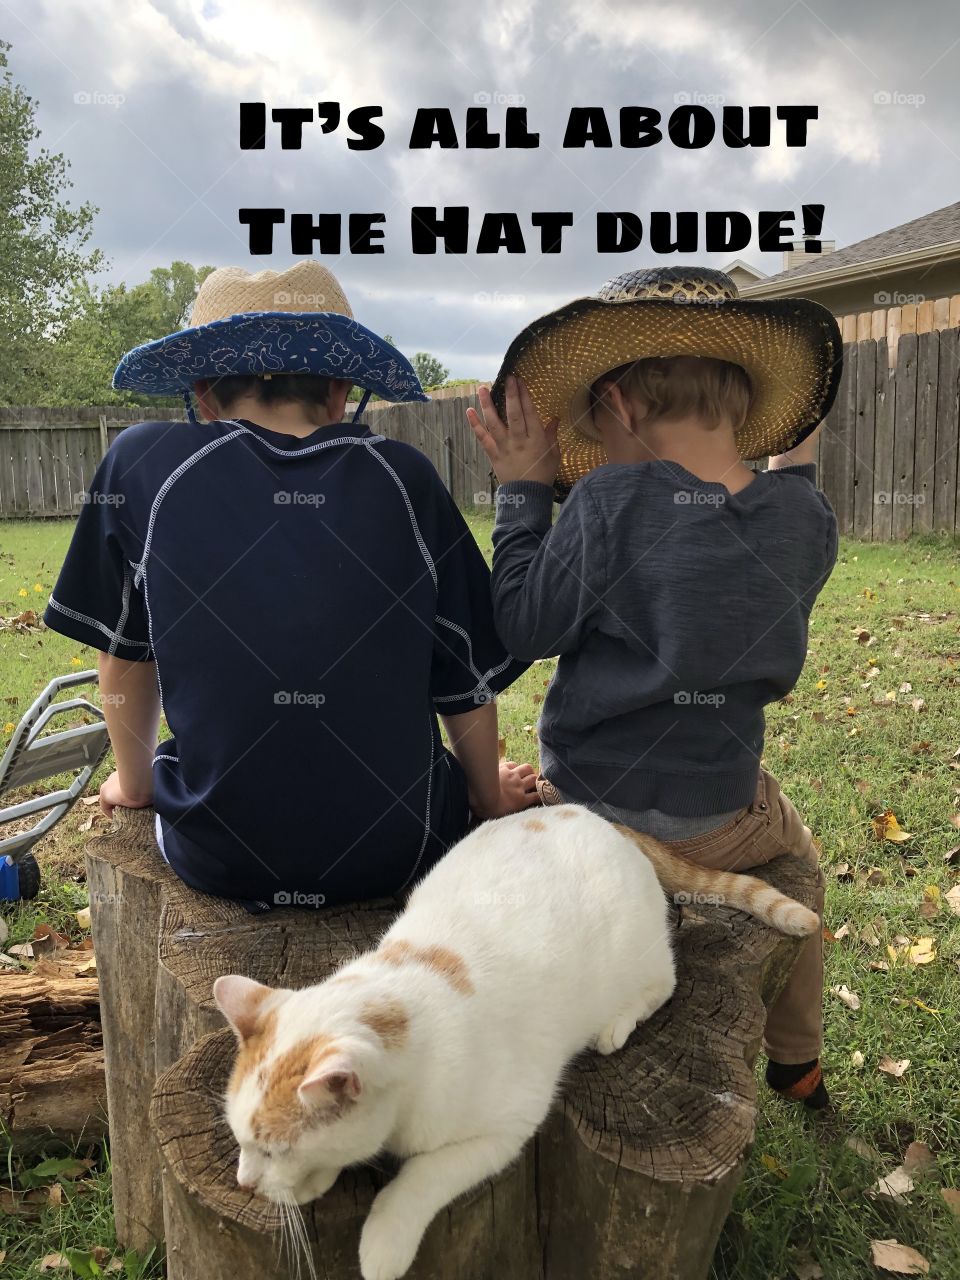 Cowboy friends admiring hats